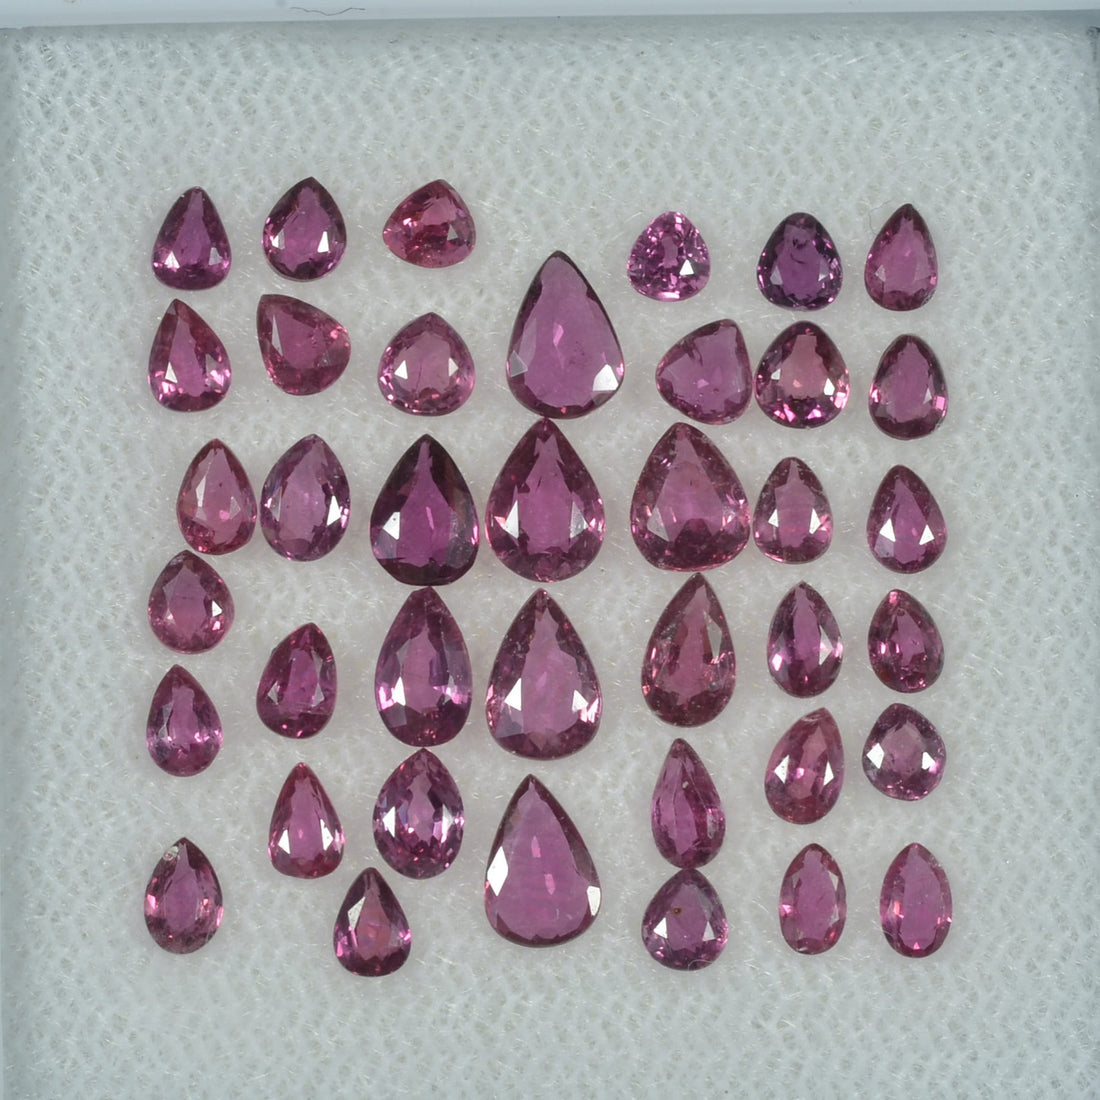 5.04 Cts Natural Ruby Loose Gemstone Pear Cut